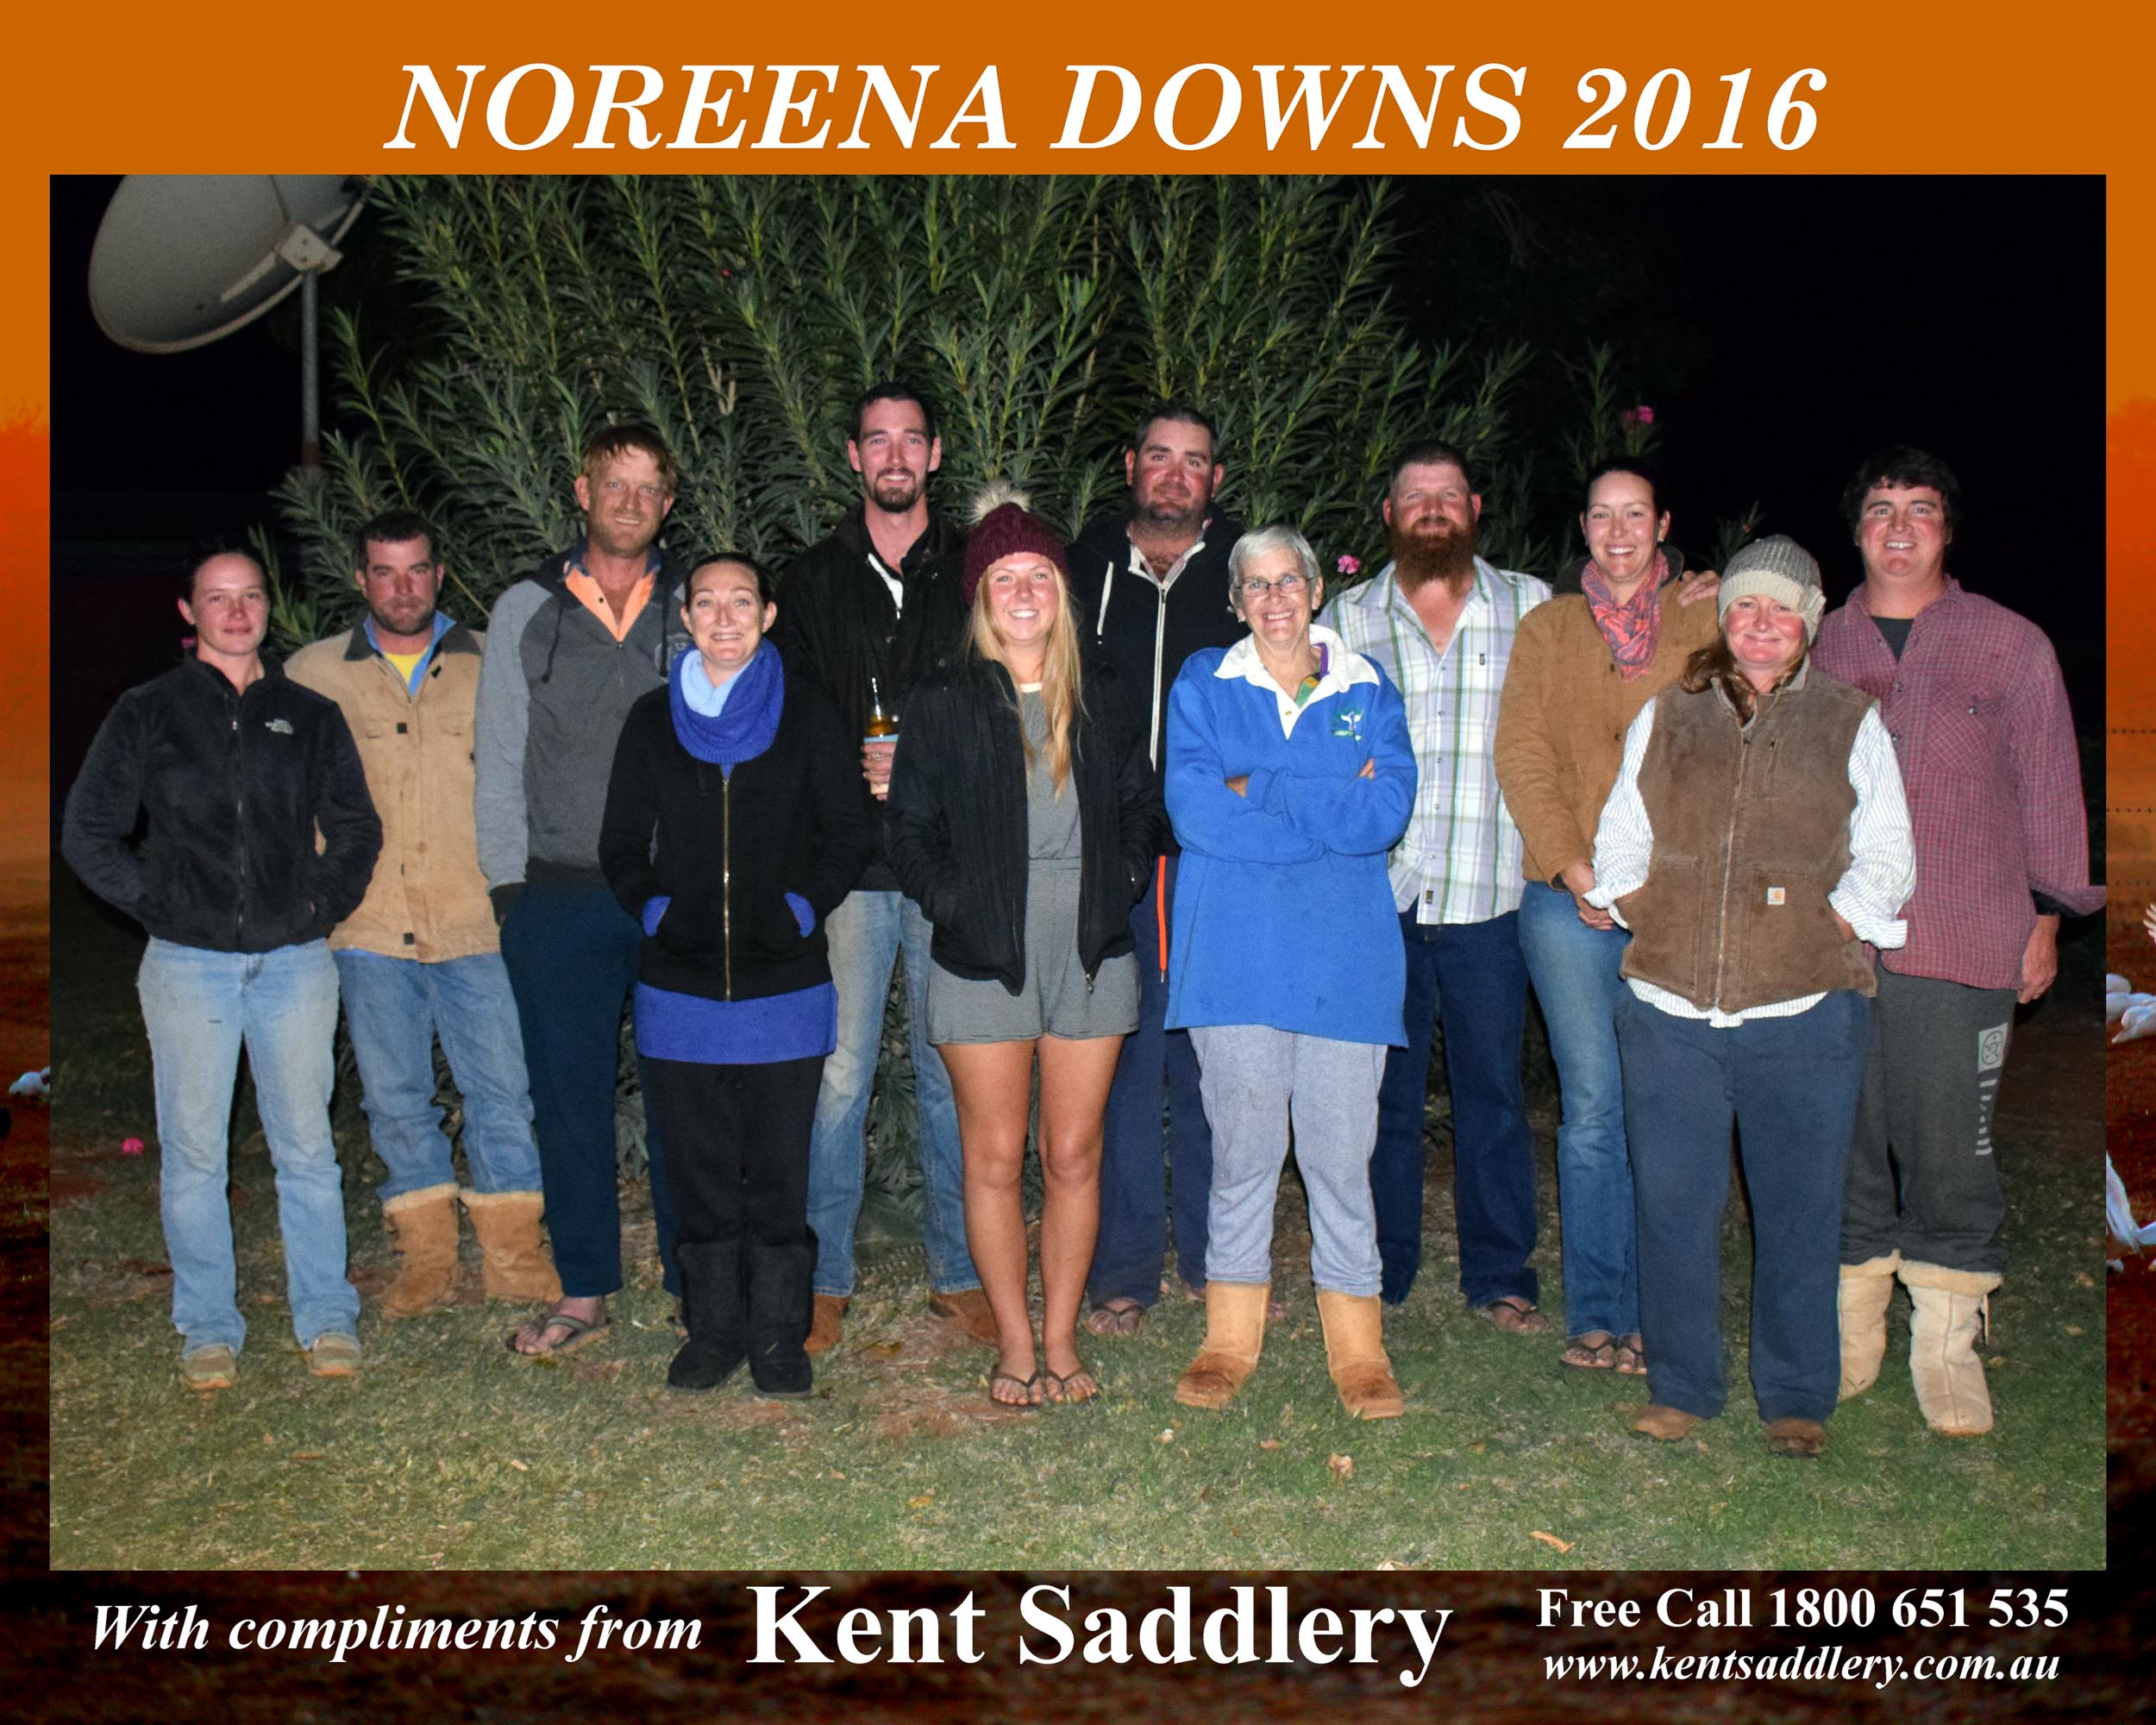 Western Australia - Noreena Downs 5